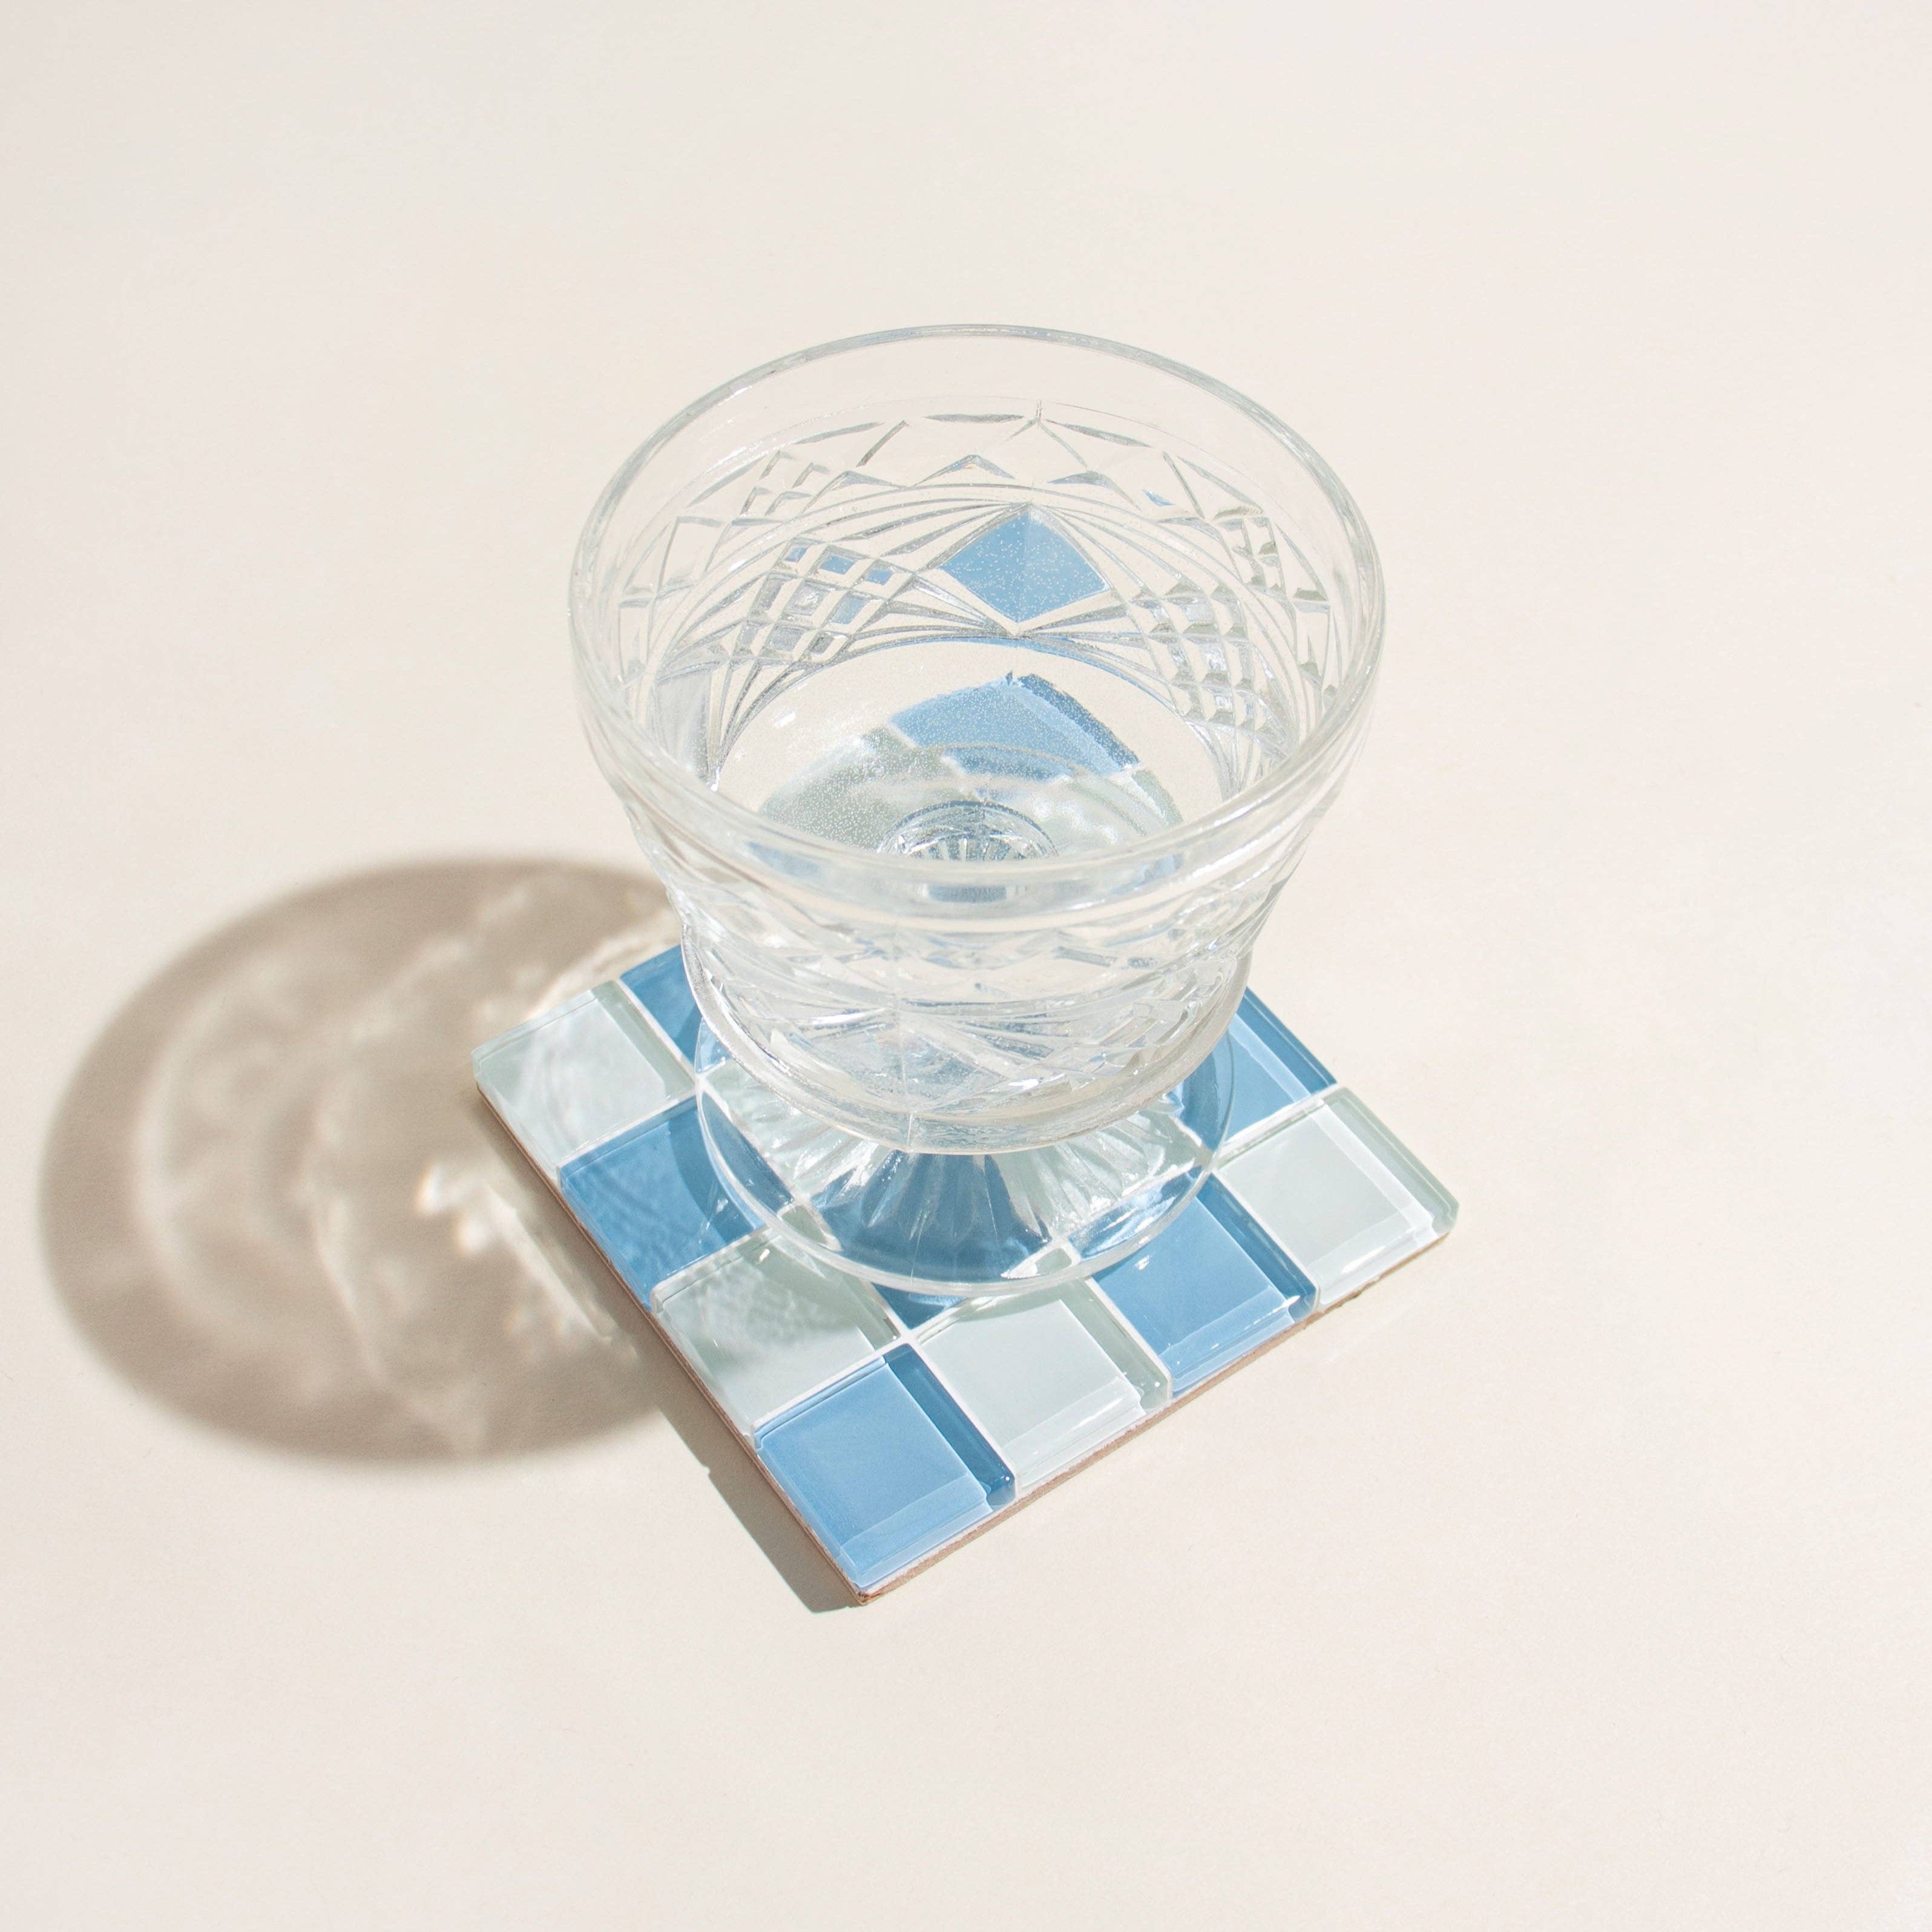 GLASS TILE COASTER - Elderberries Milk Chocolate by Subtle Art Studios